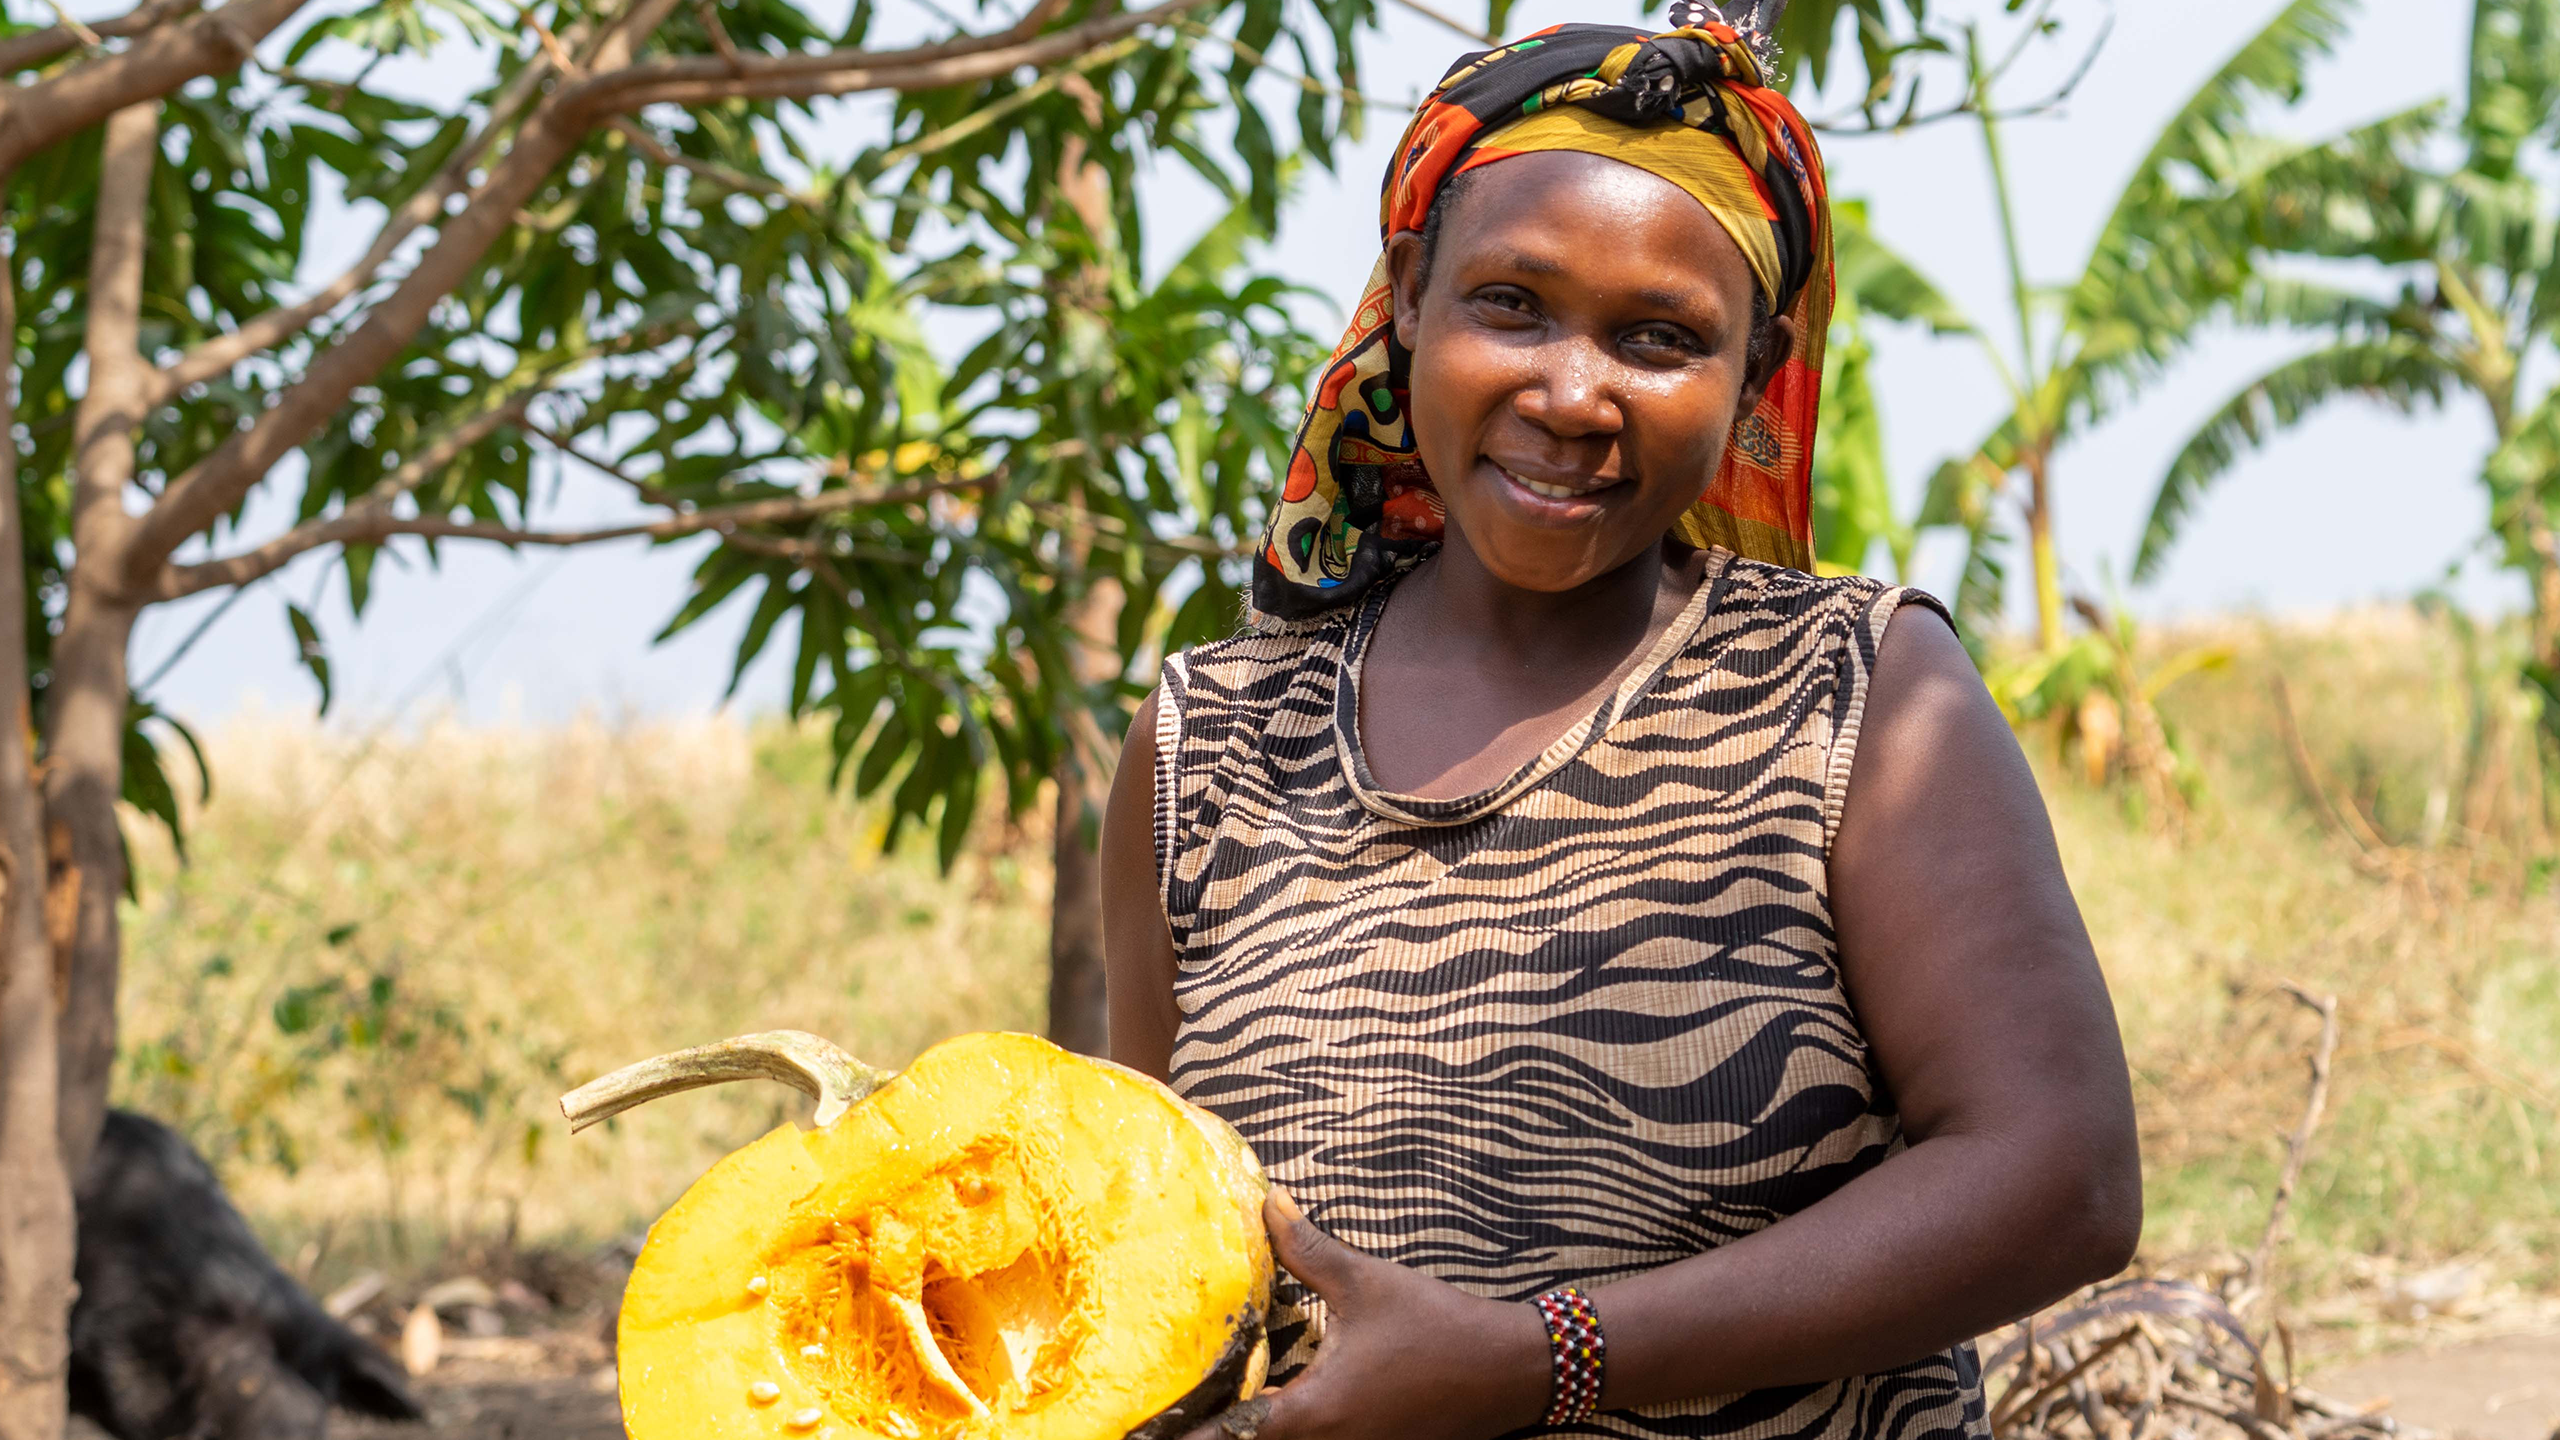 Aisha shows us a pumpkin she is ready to eat in Kabukanga cluster, Kagadi district.